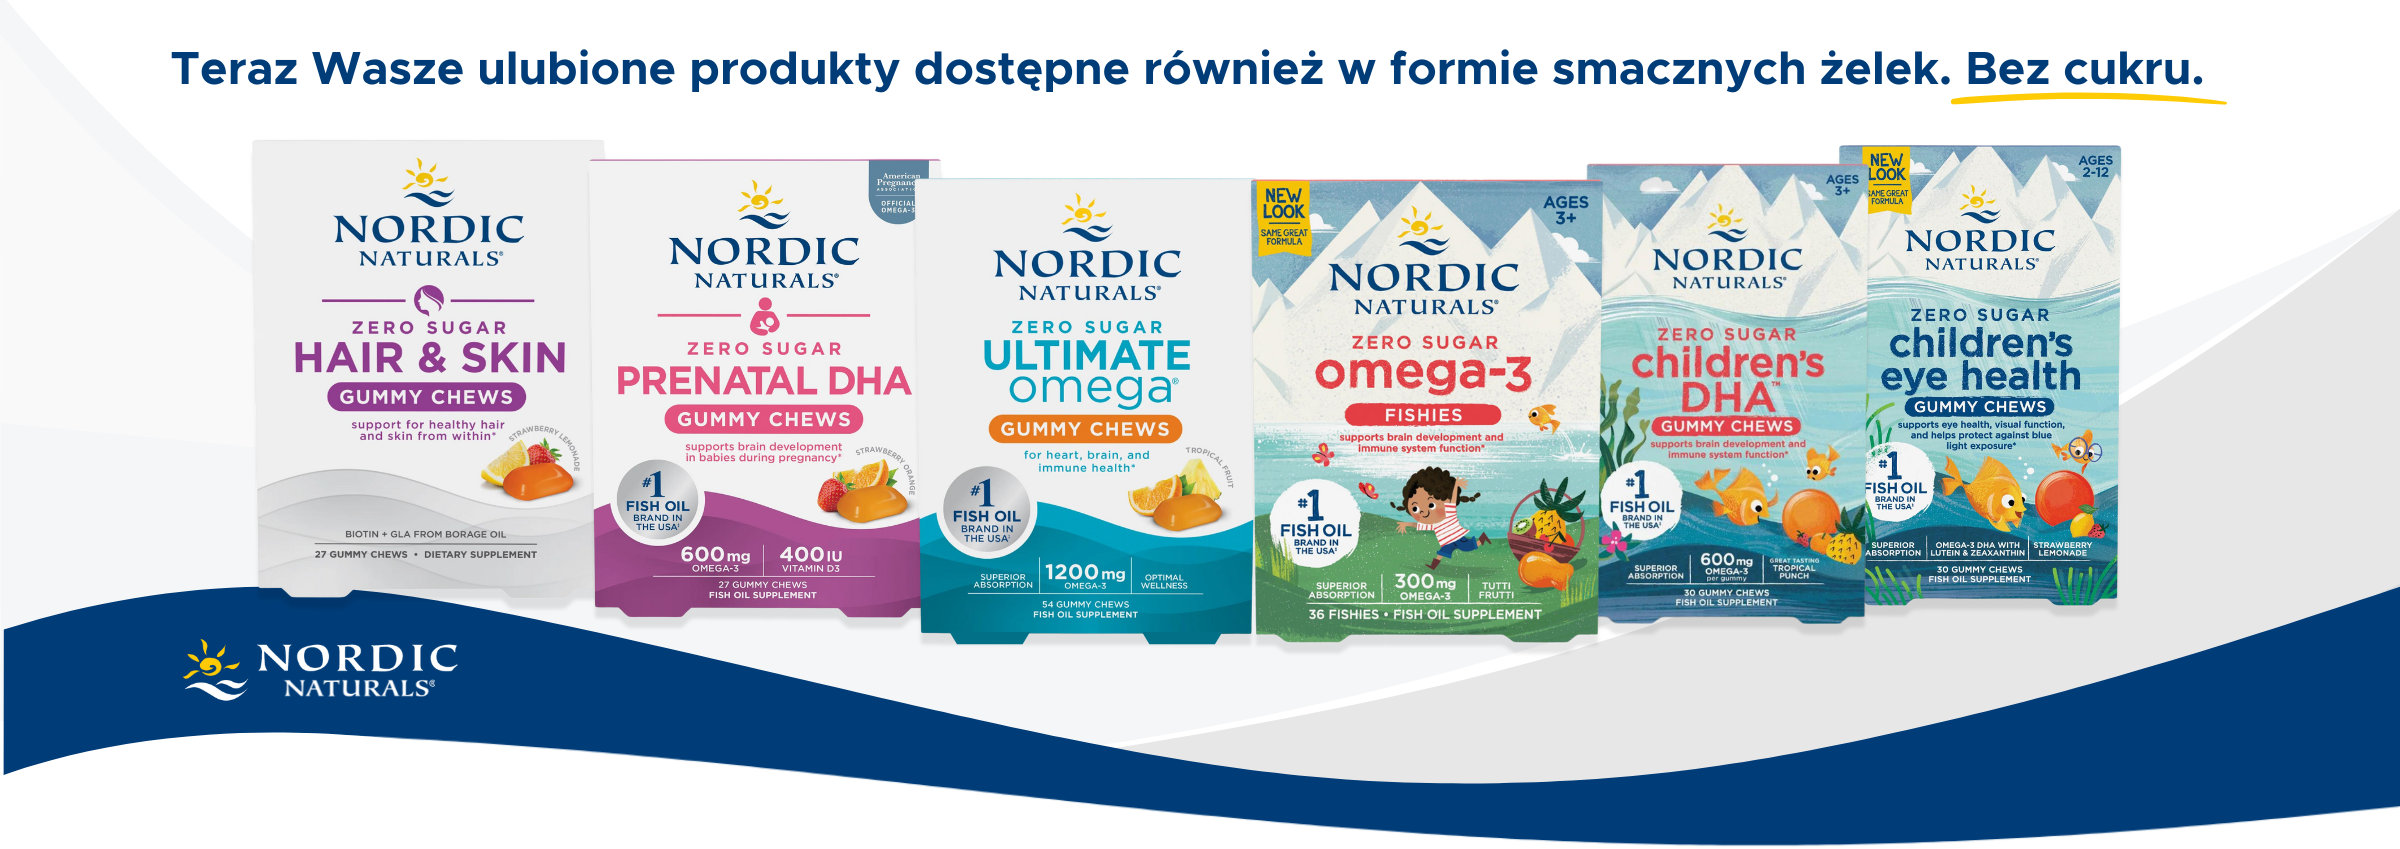 Nordic Naturals smaczne żelki bez cukru